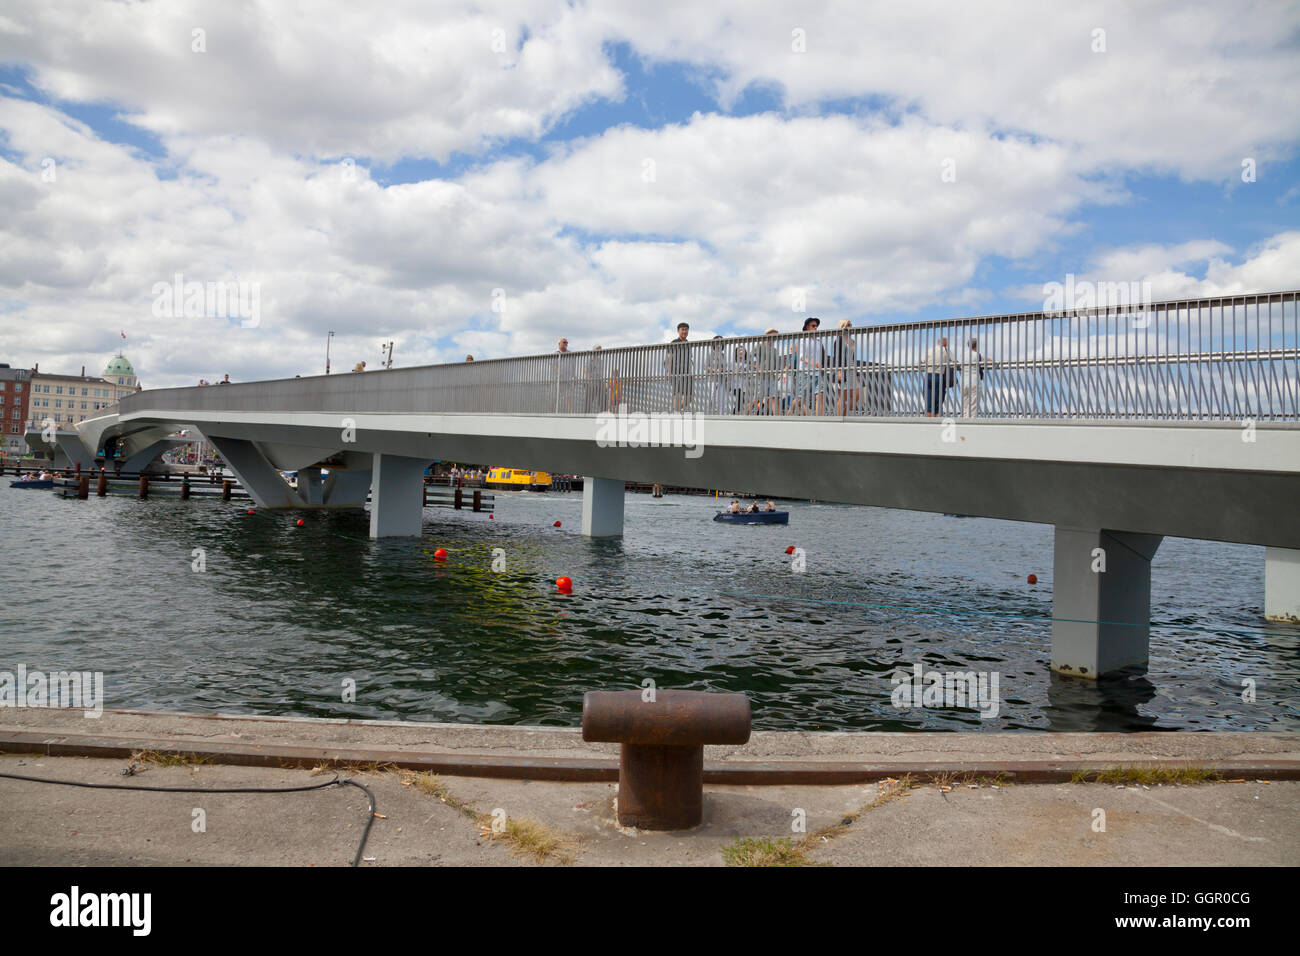 The new pedestrian and cyclist bridge, the Inner Harbour Bridge, the Kissing Bridge, connecting Nyhavn and Christianshavn. Copenhagen, Denmark. Stock Photo